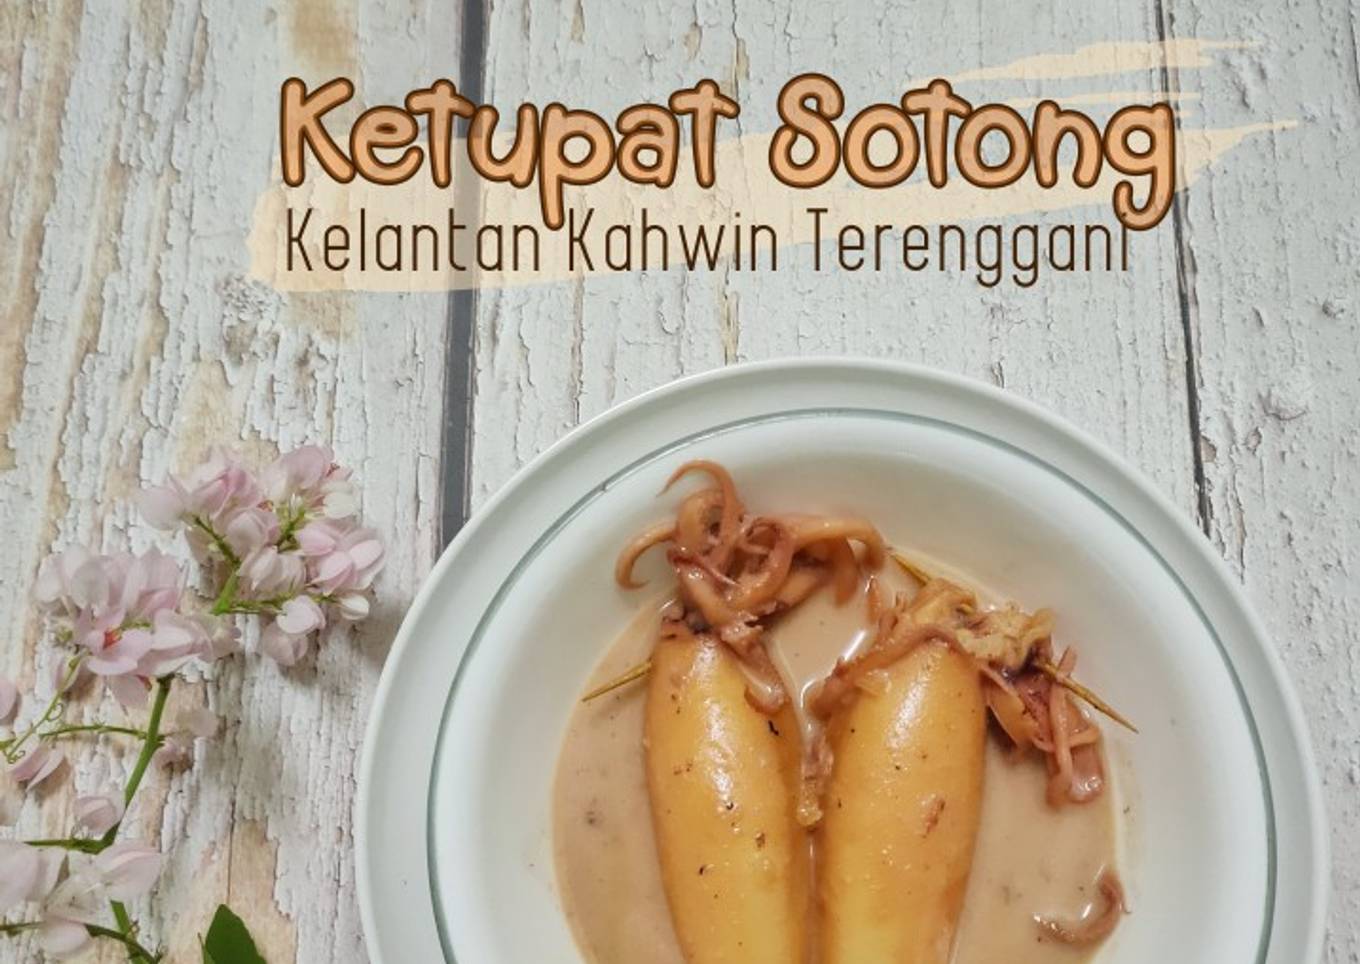 Ketupat Sotong Kelantan Kahwin Terengganu